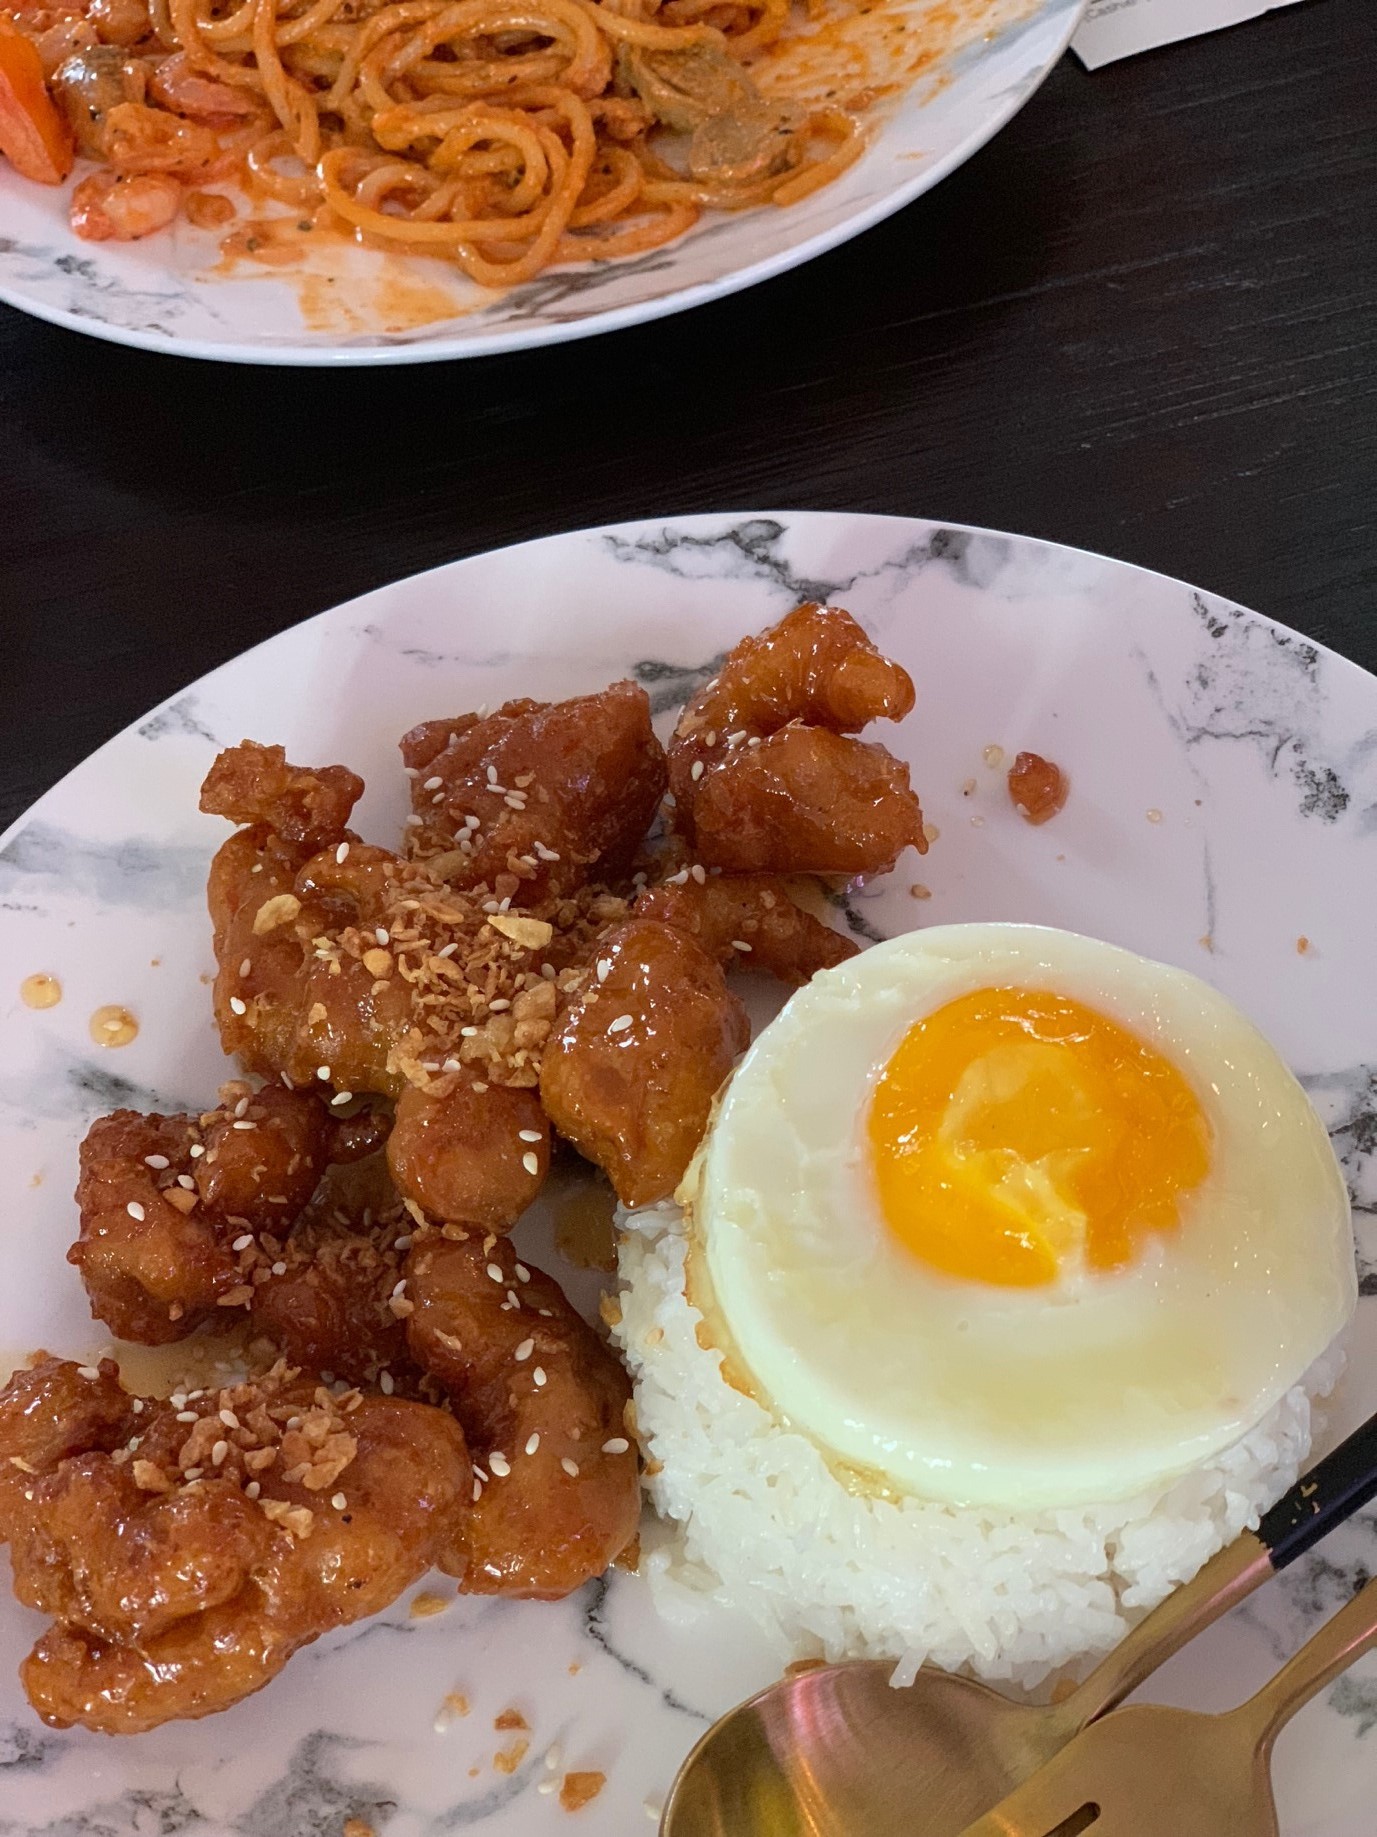 Food Review: Cafe4you (Bukit Merah Central)